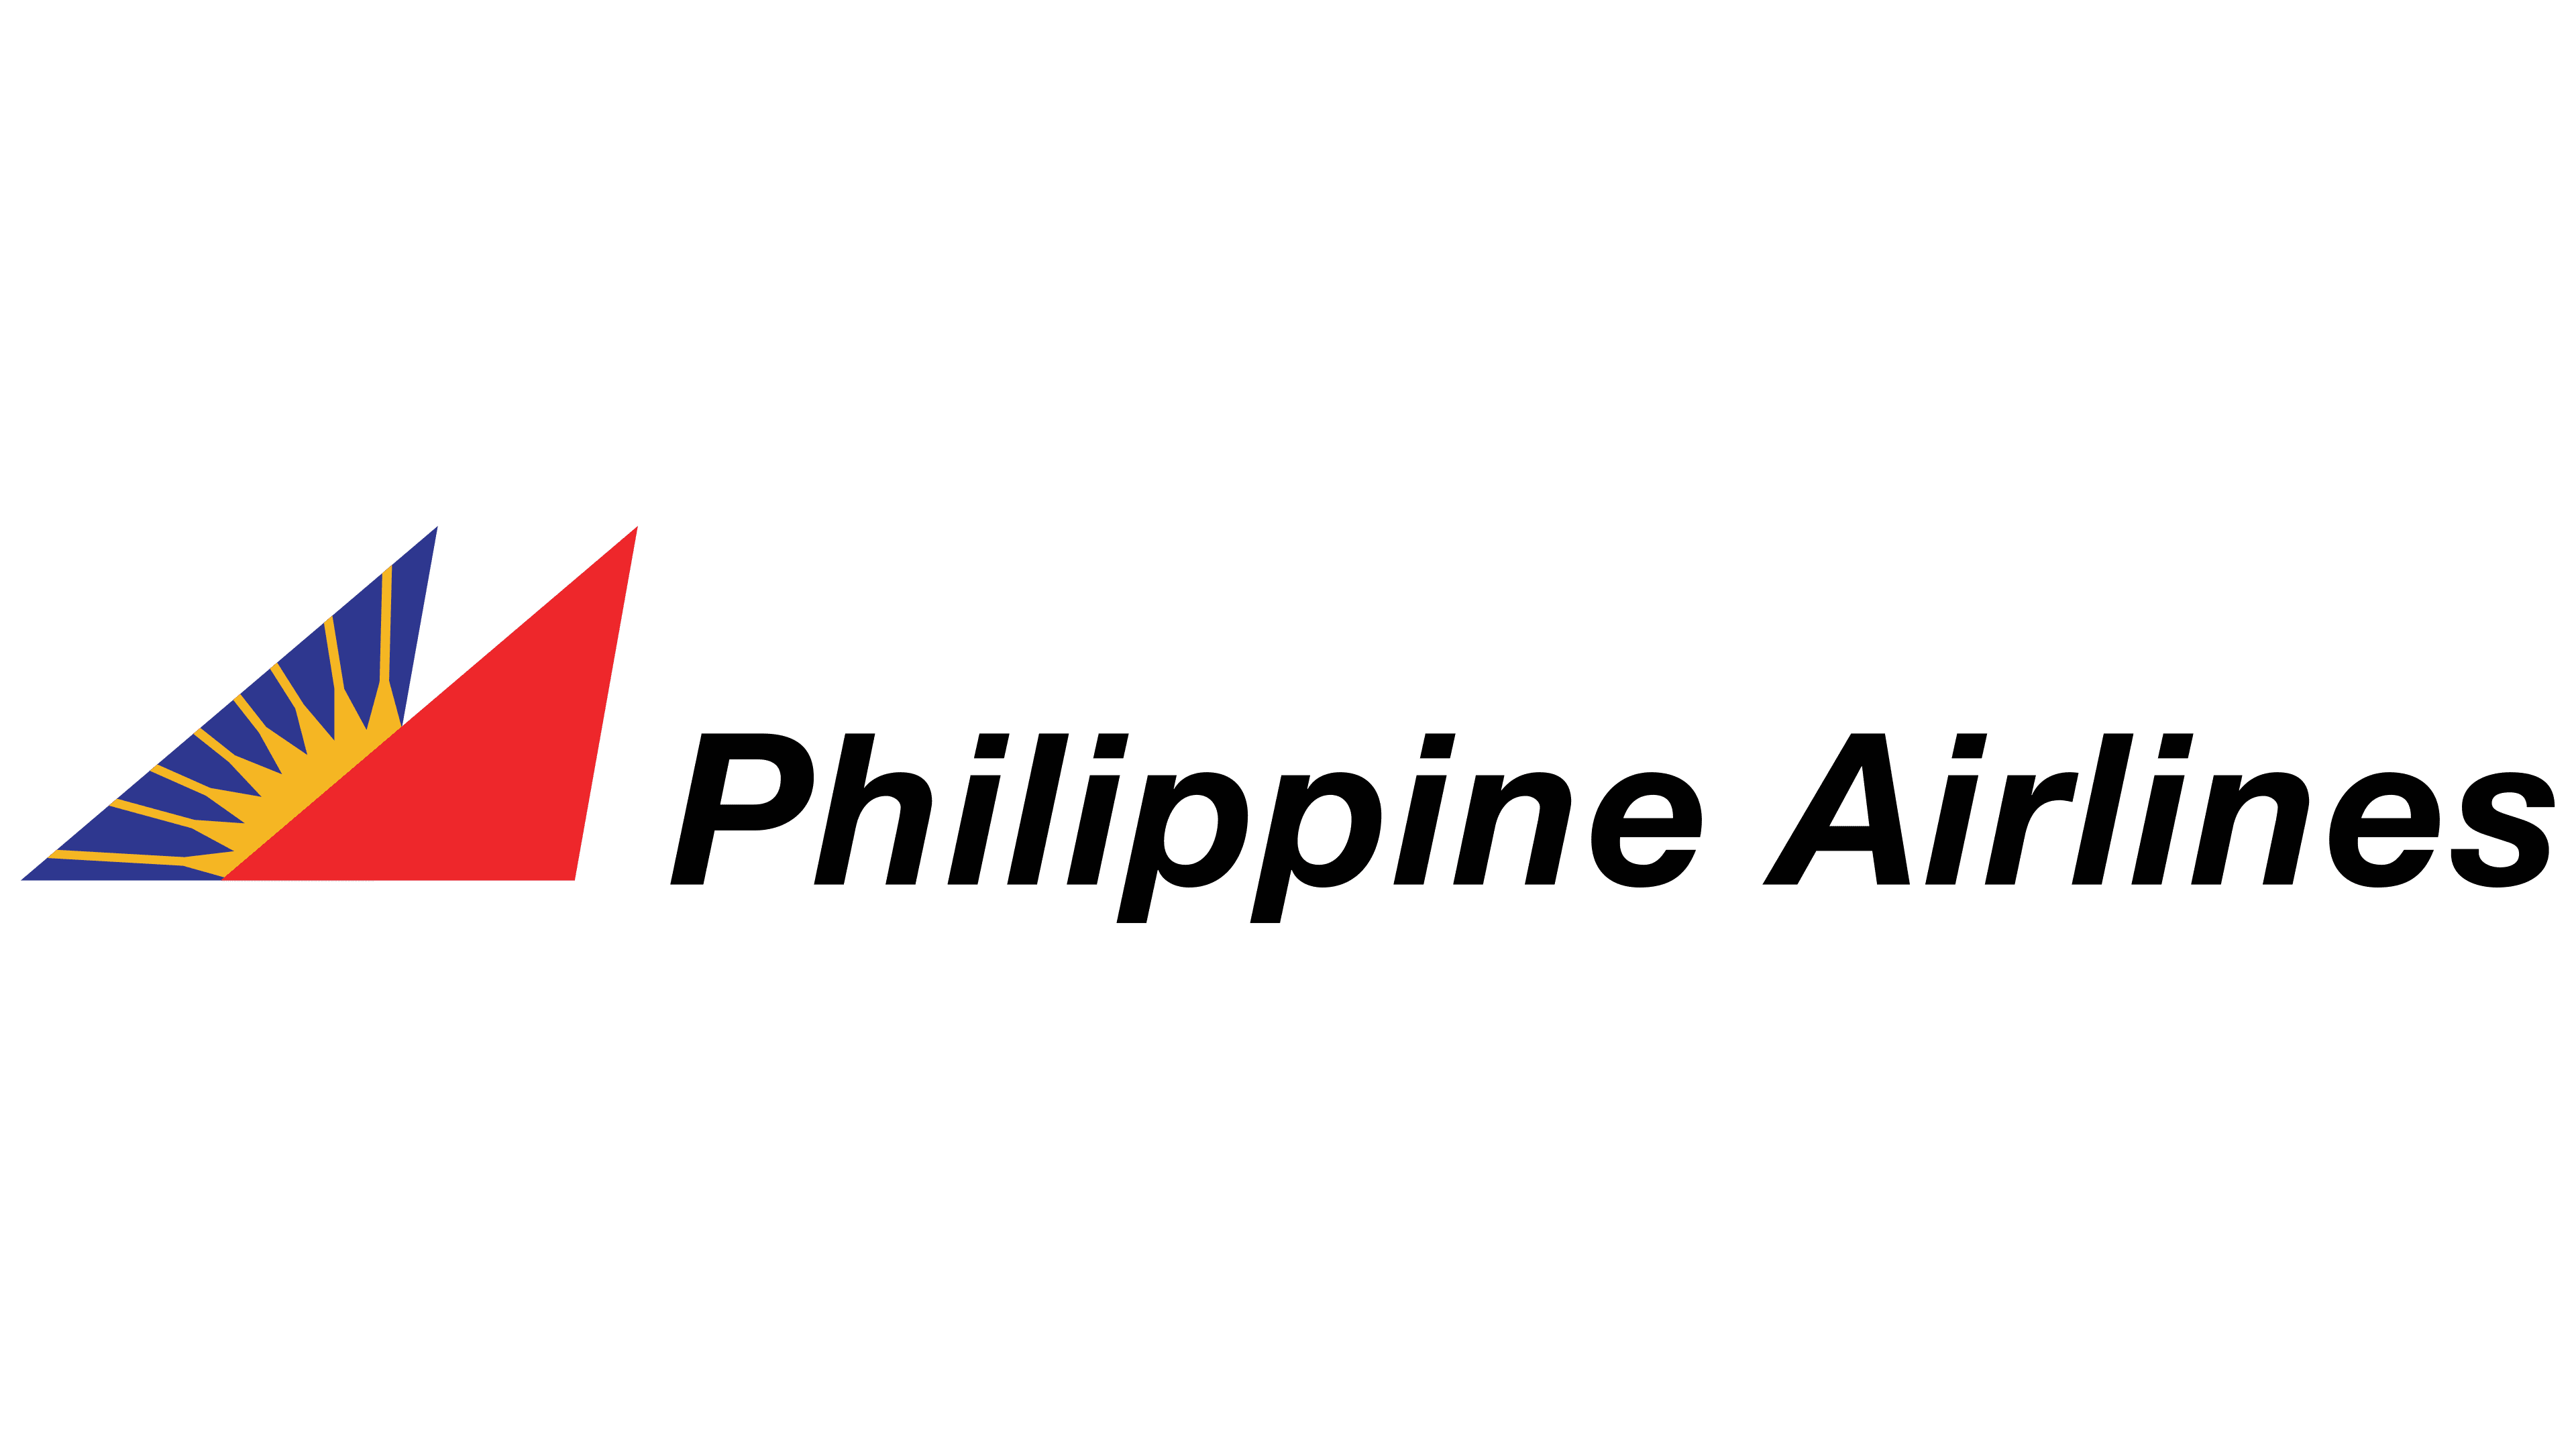 Philippines Airlines logo.